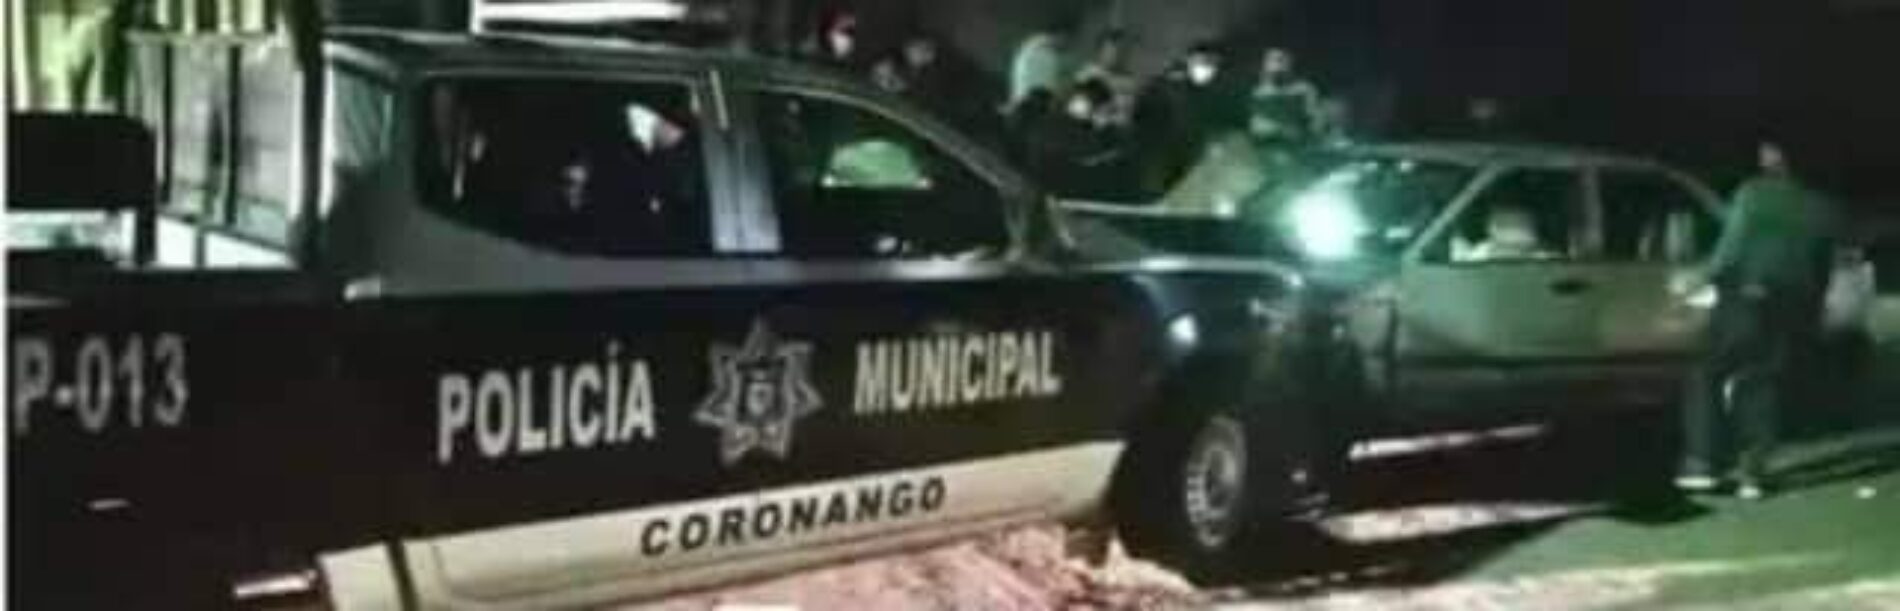 POLICIAS EBRIOS PROVOCAN ACCIDENTE